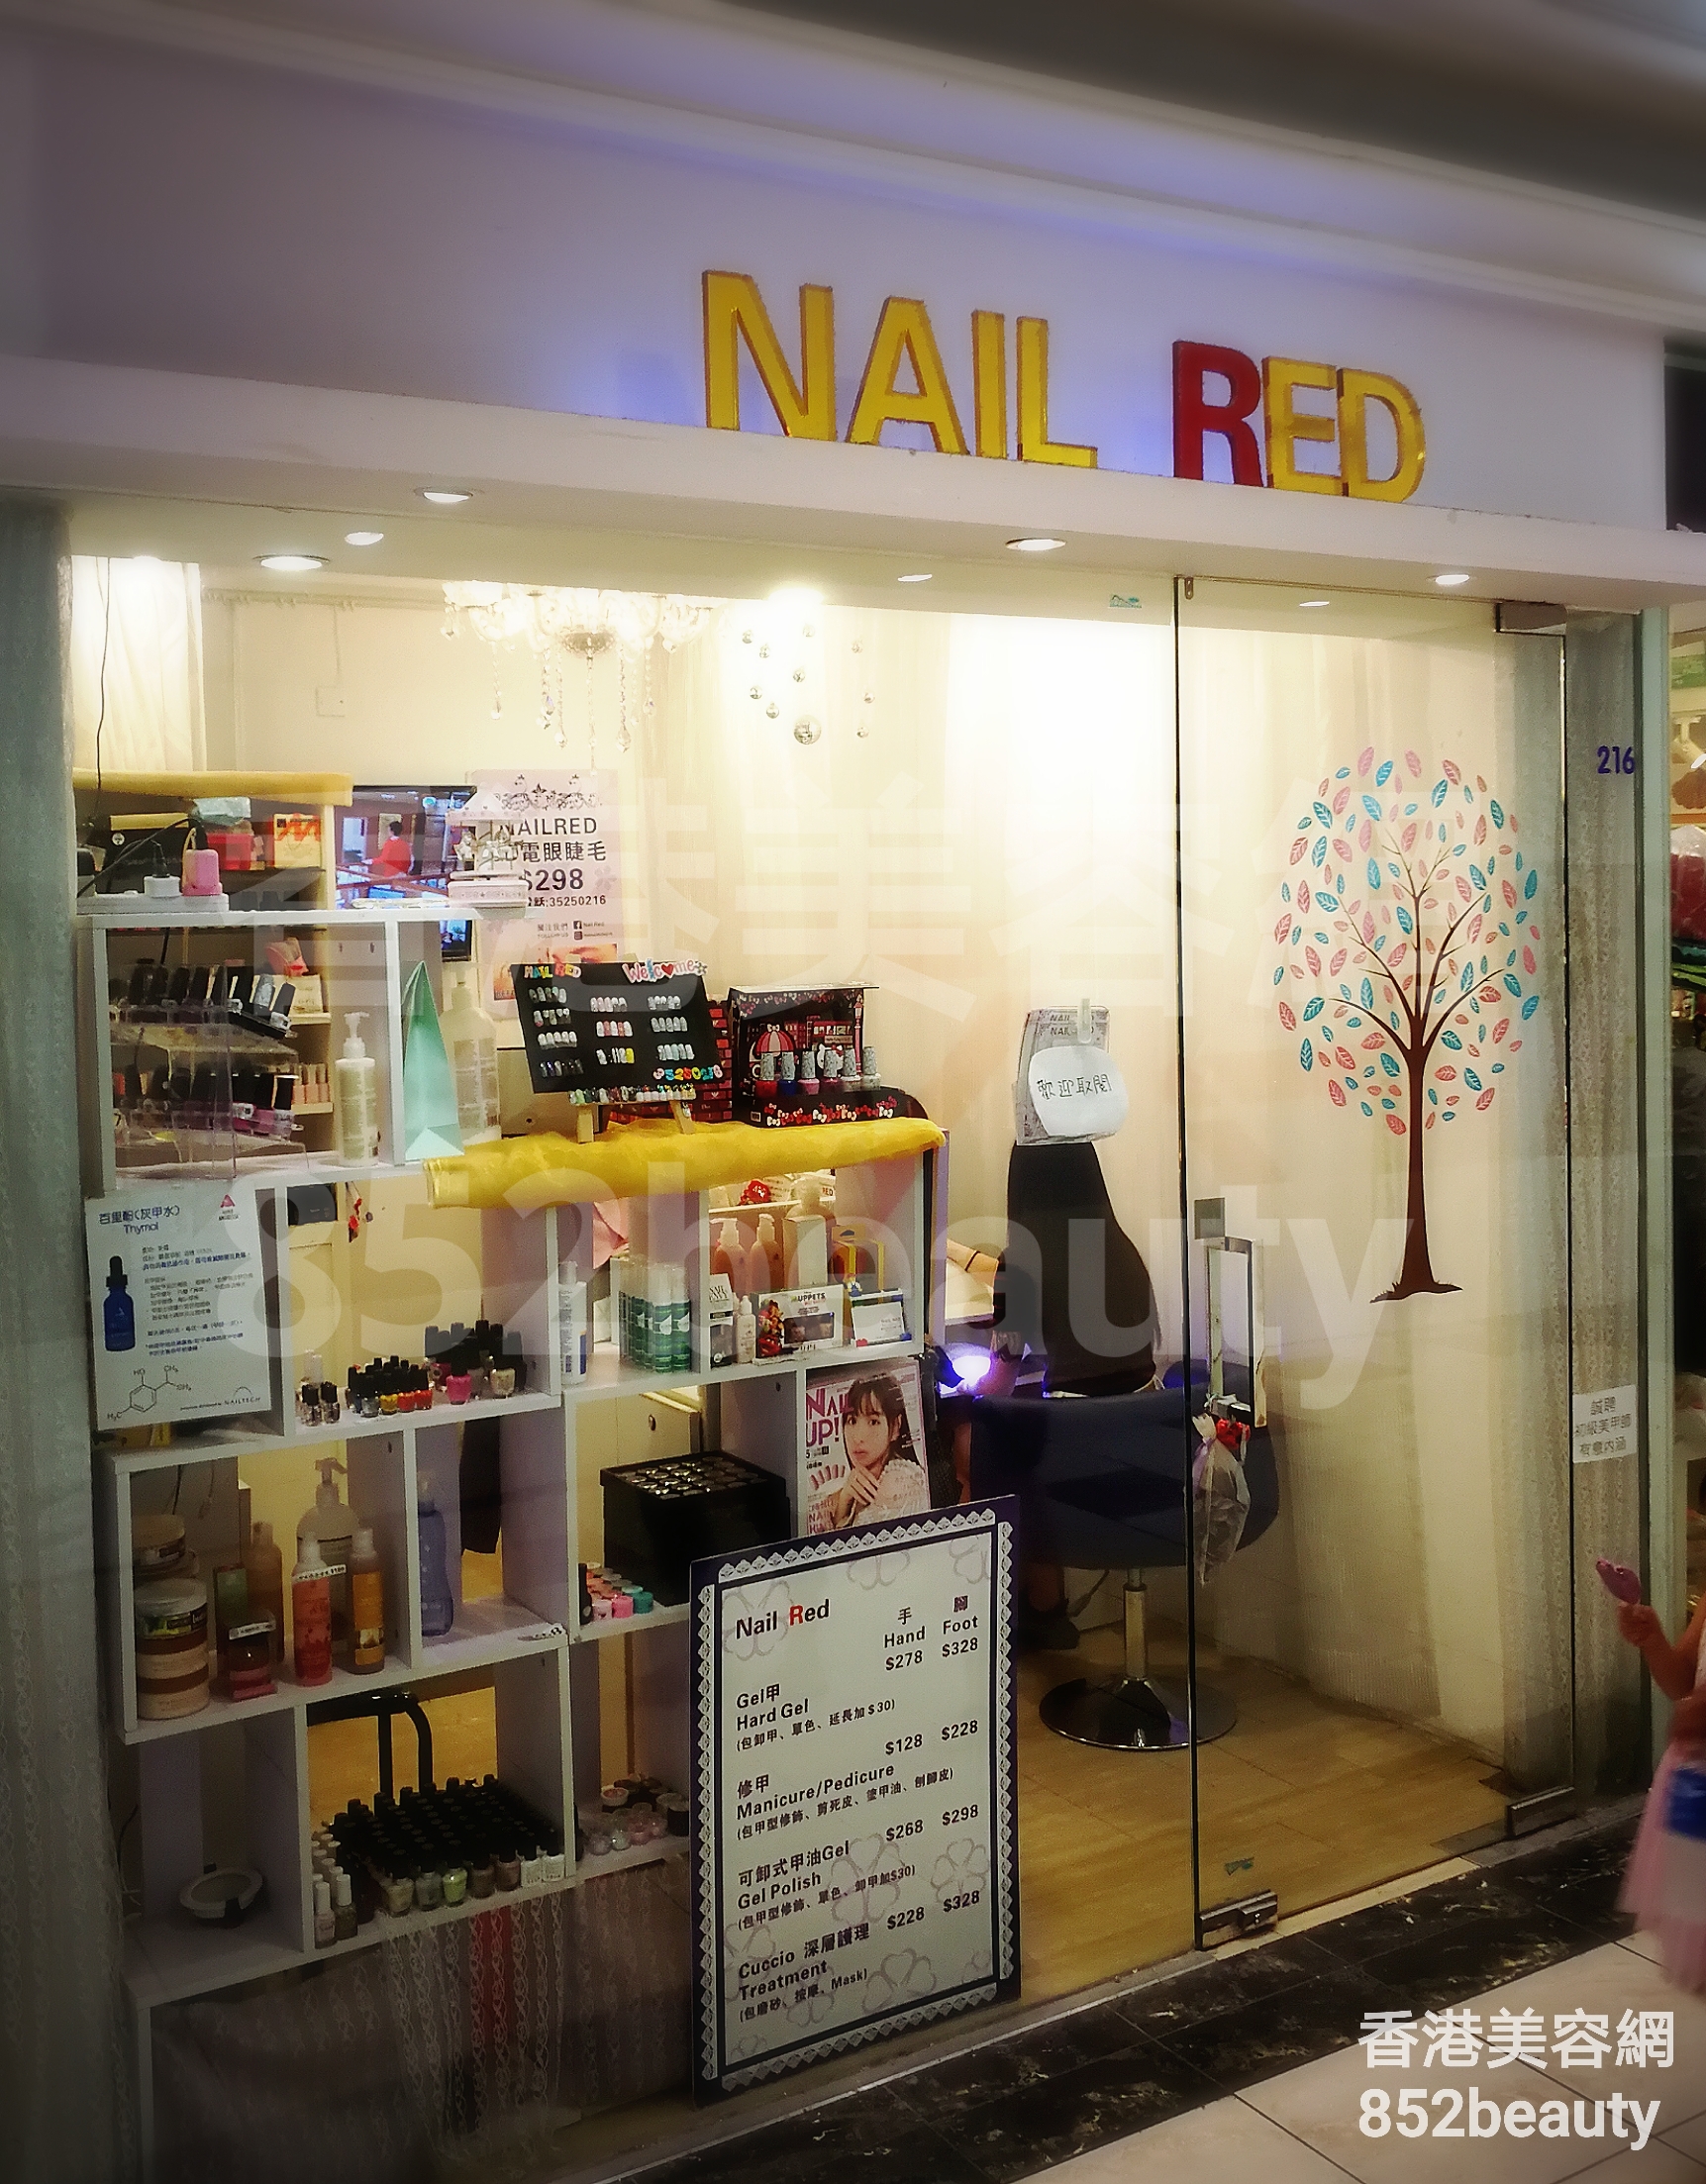 香港美容網 Hong Kong Beauty Salon 美容院 / 美容師: NAIL RED